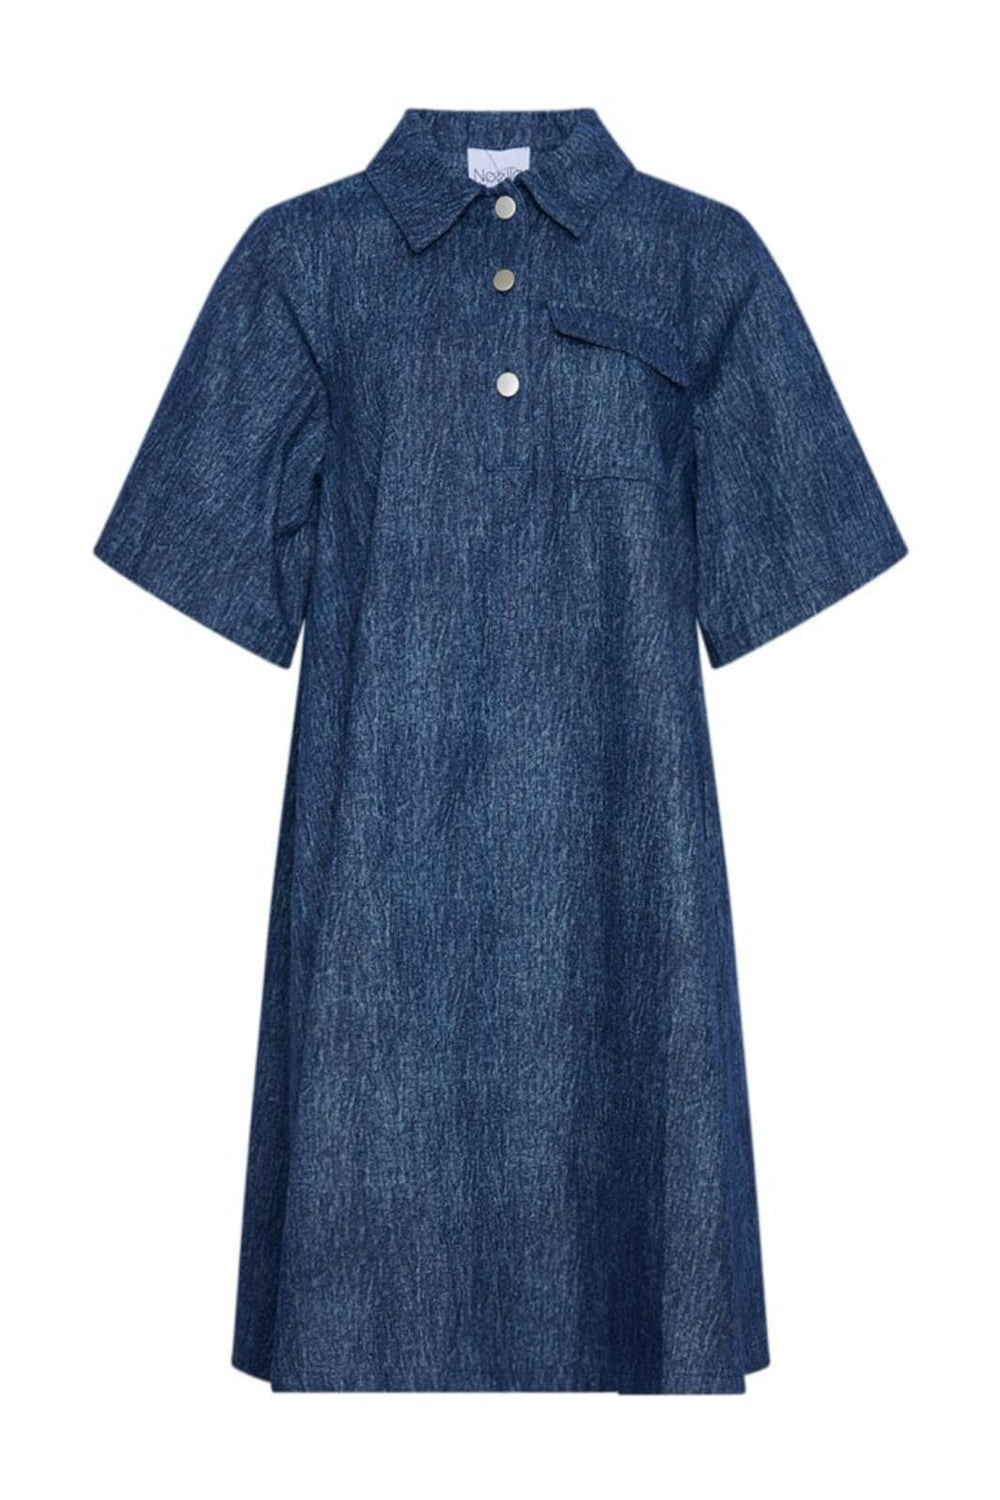 Noella - Jozie Dress - 1050 Blue Snow Wash Kjoler 